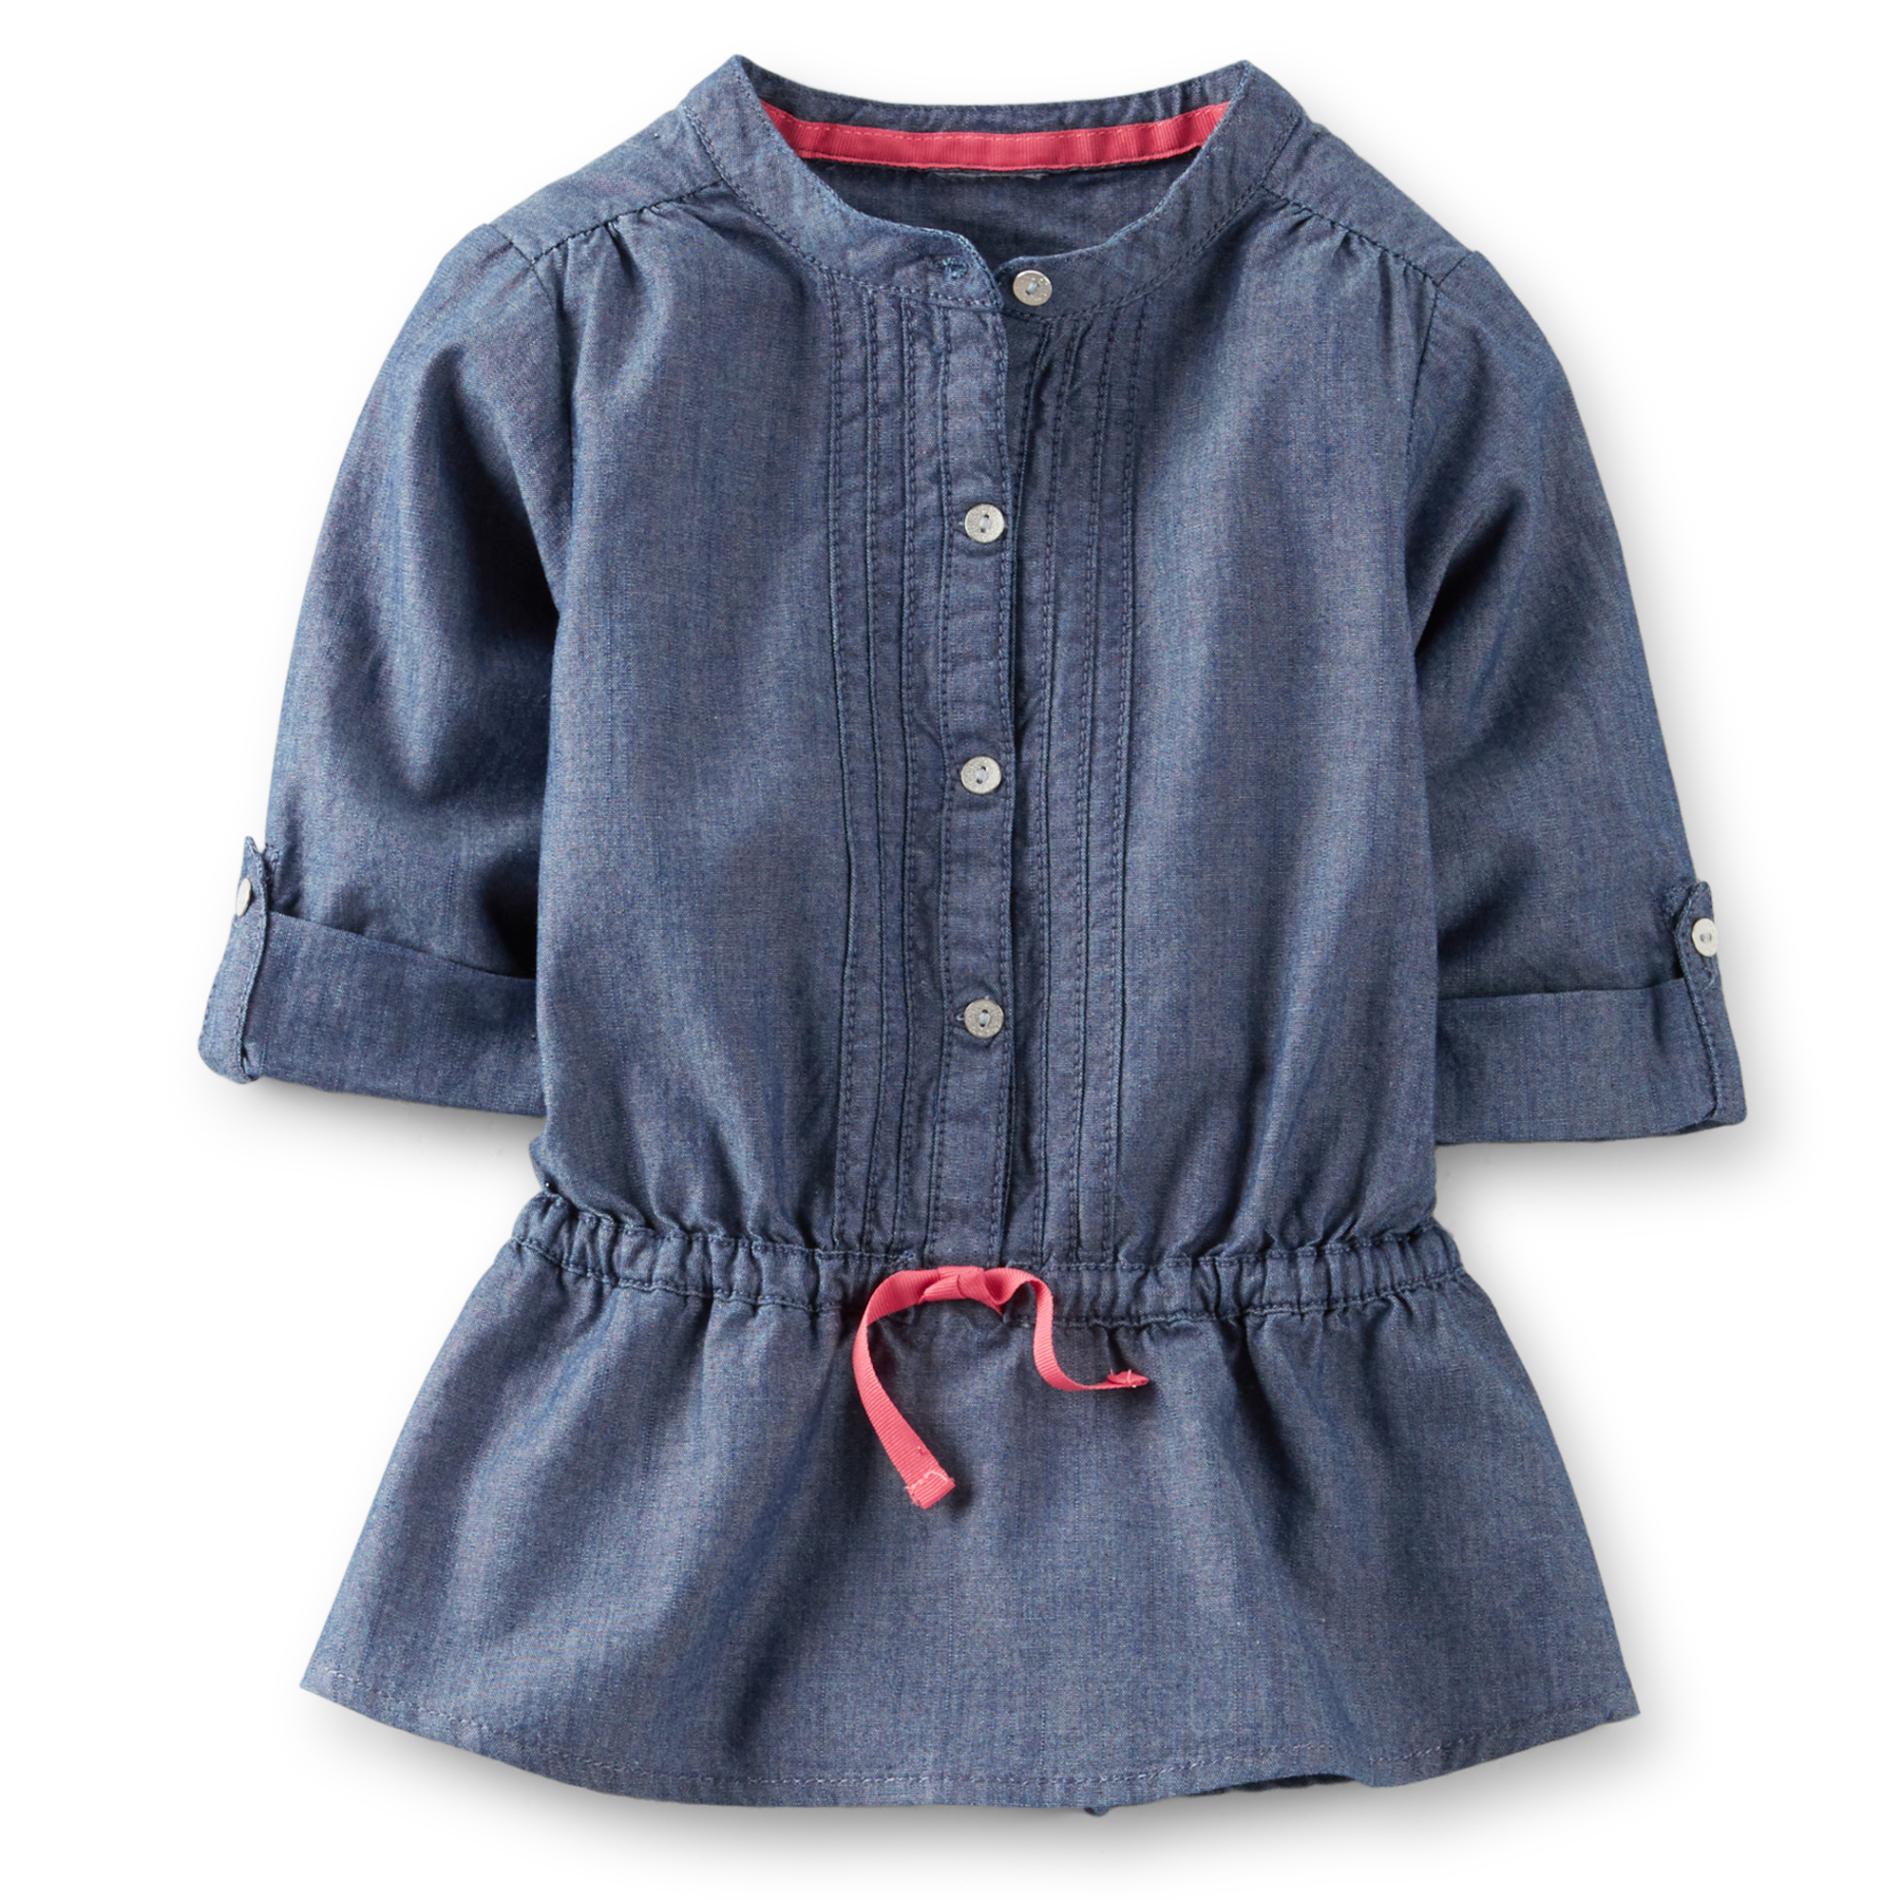 Carter's Toddler Girl's Woven Tunic